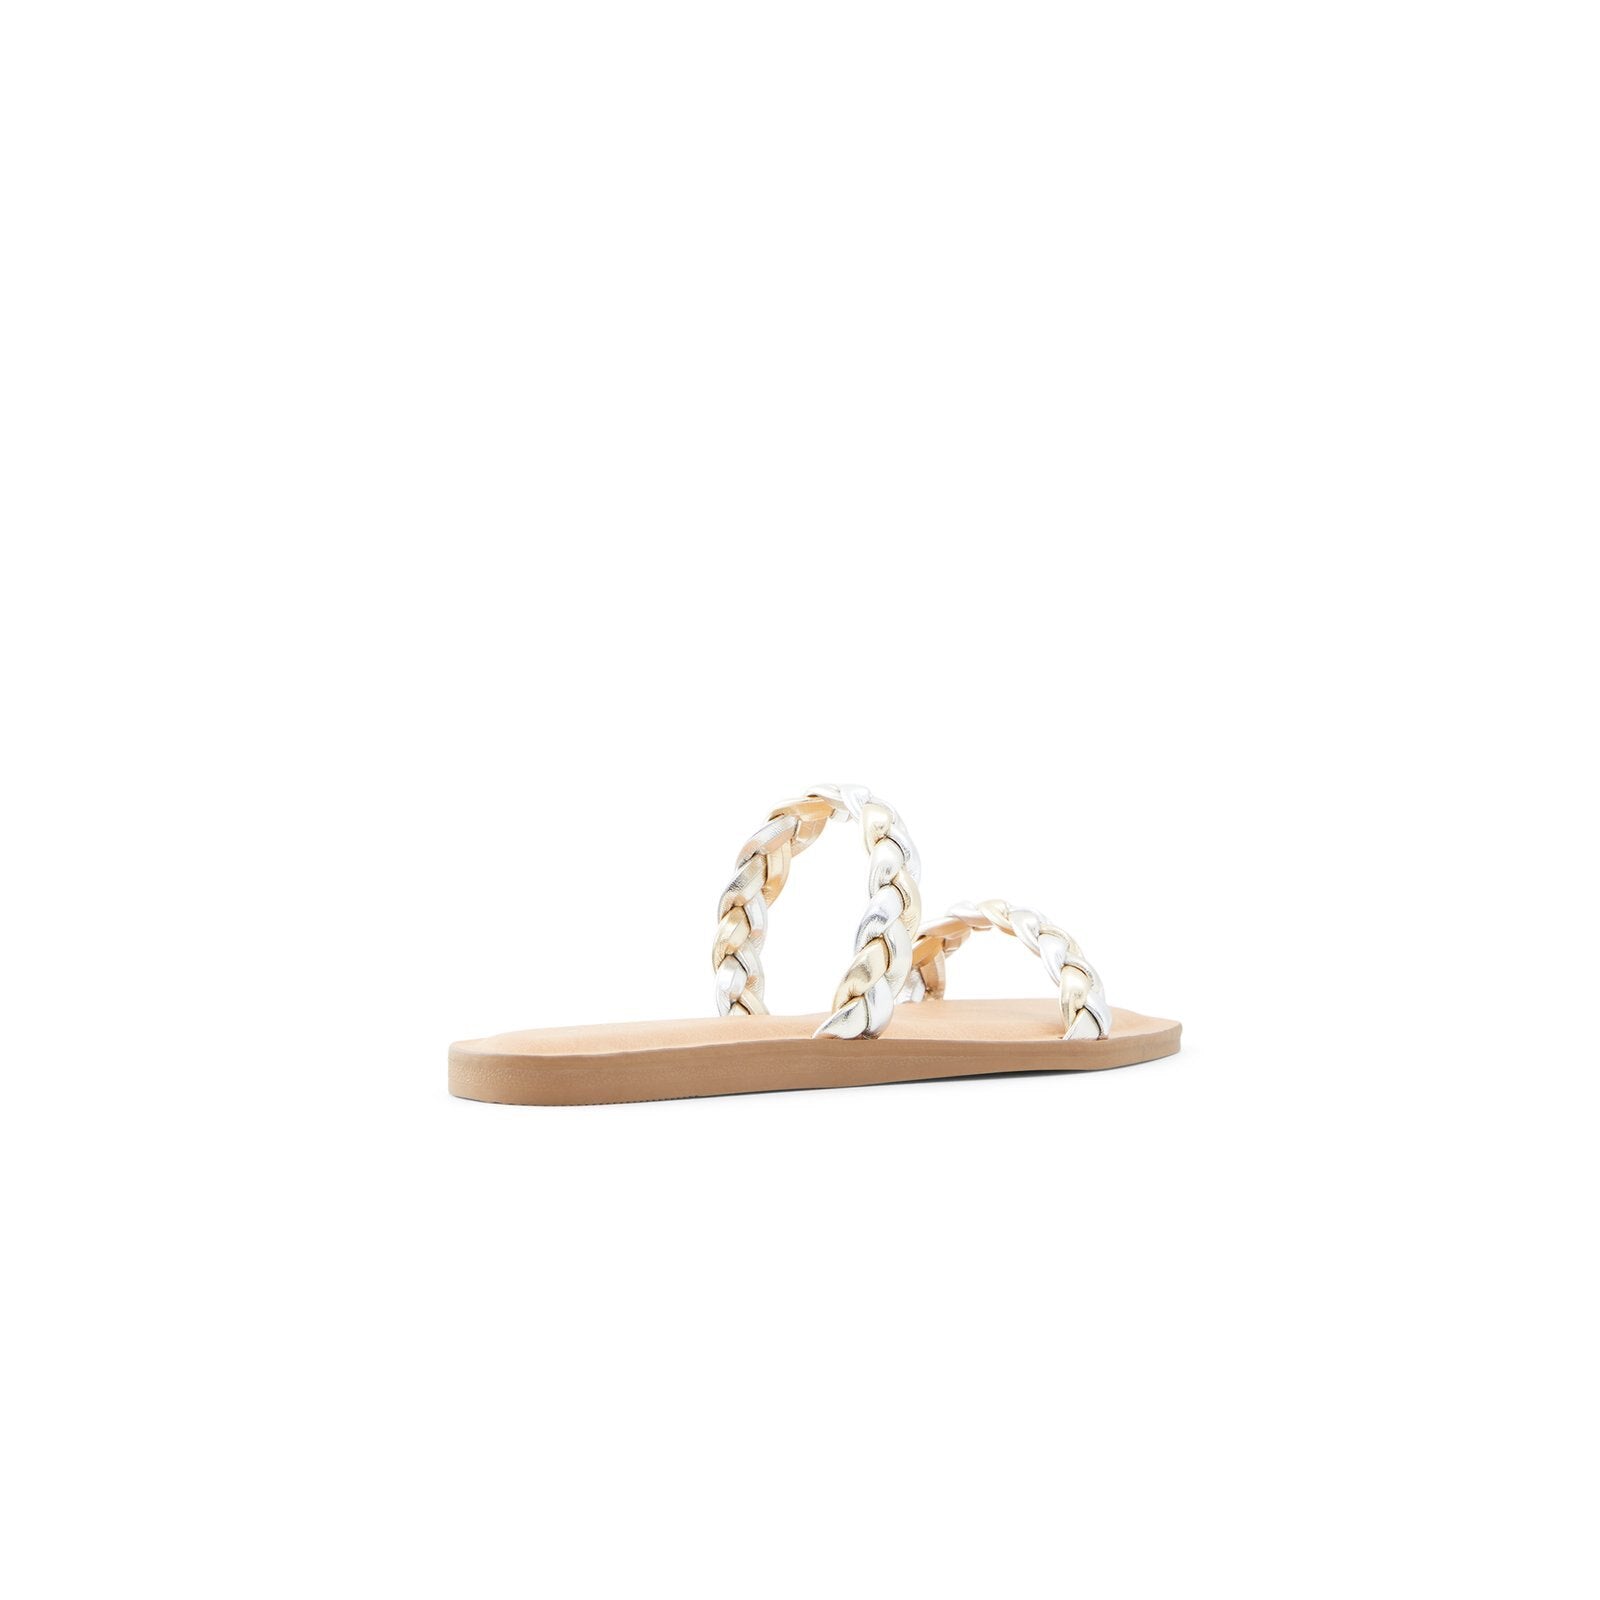 Elilirwen / Flat Sandals Women Shoes - GOLD - CALL IT SPRING KSA